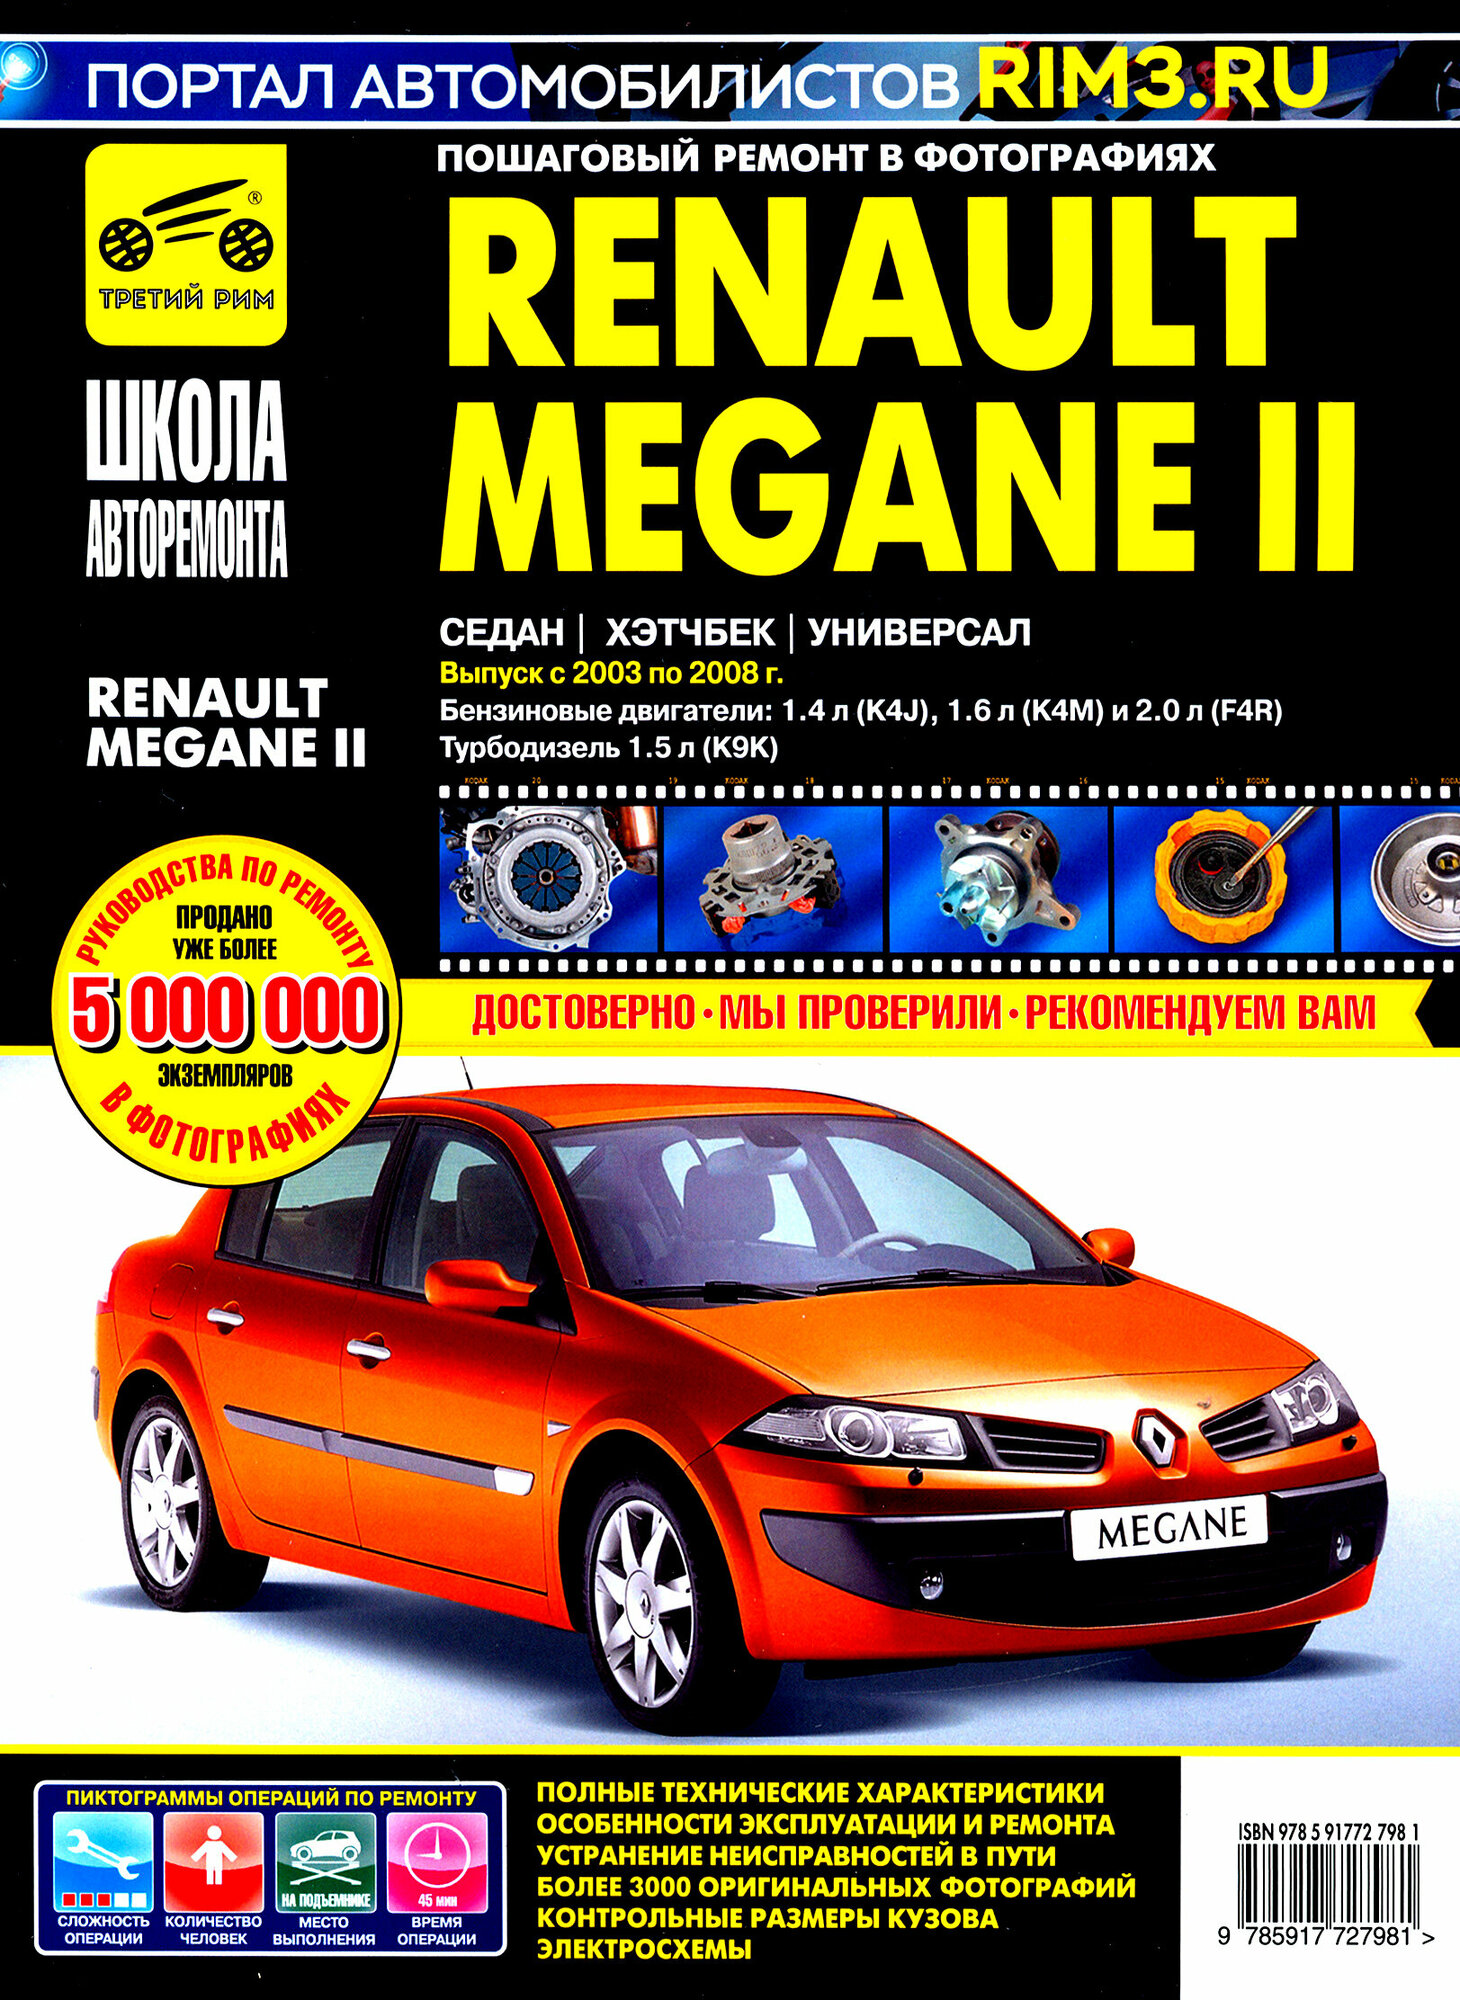 Renault Megane II 2003-2008. Книга руководство по ремонту и эксплуатации. Третий Рим